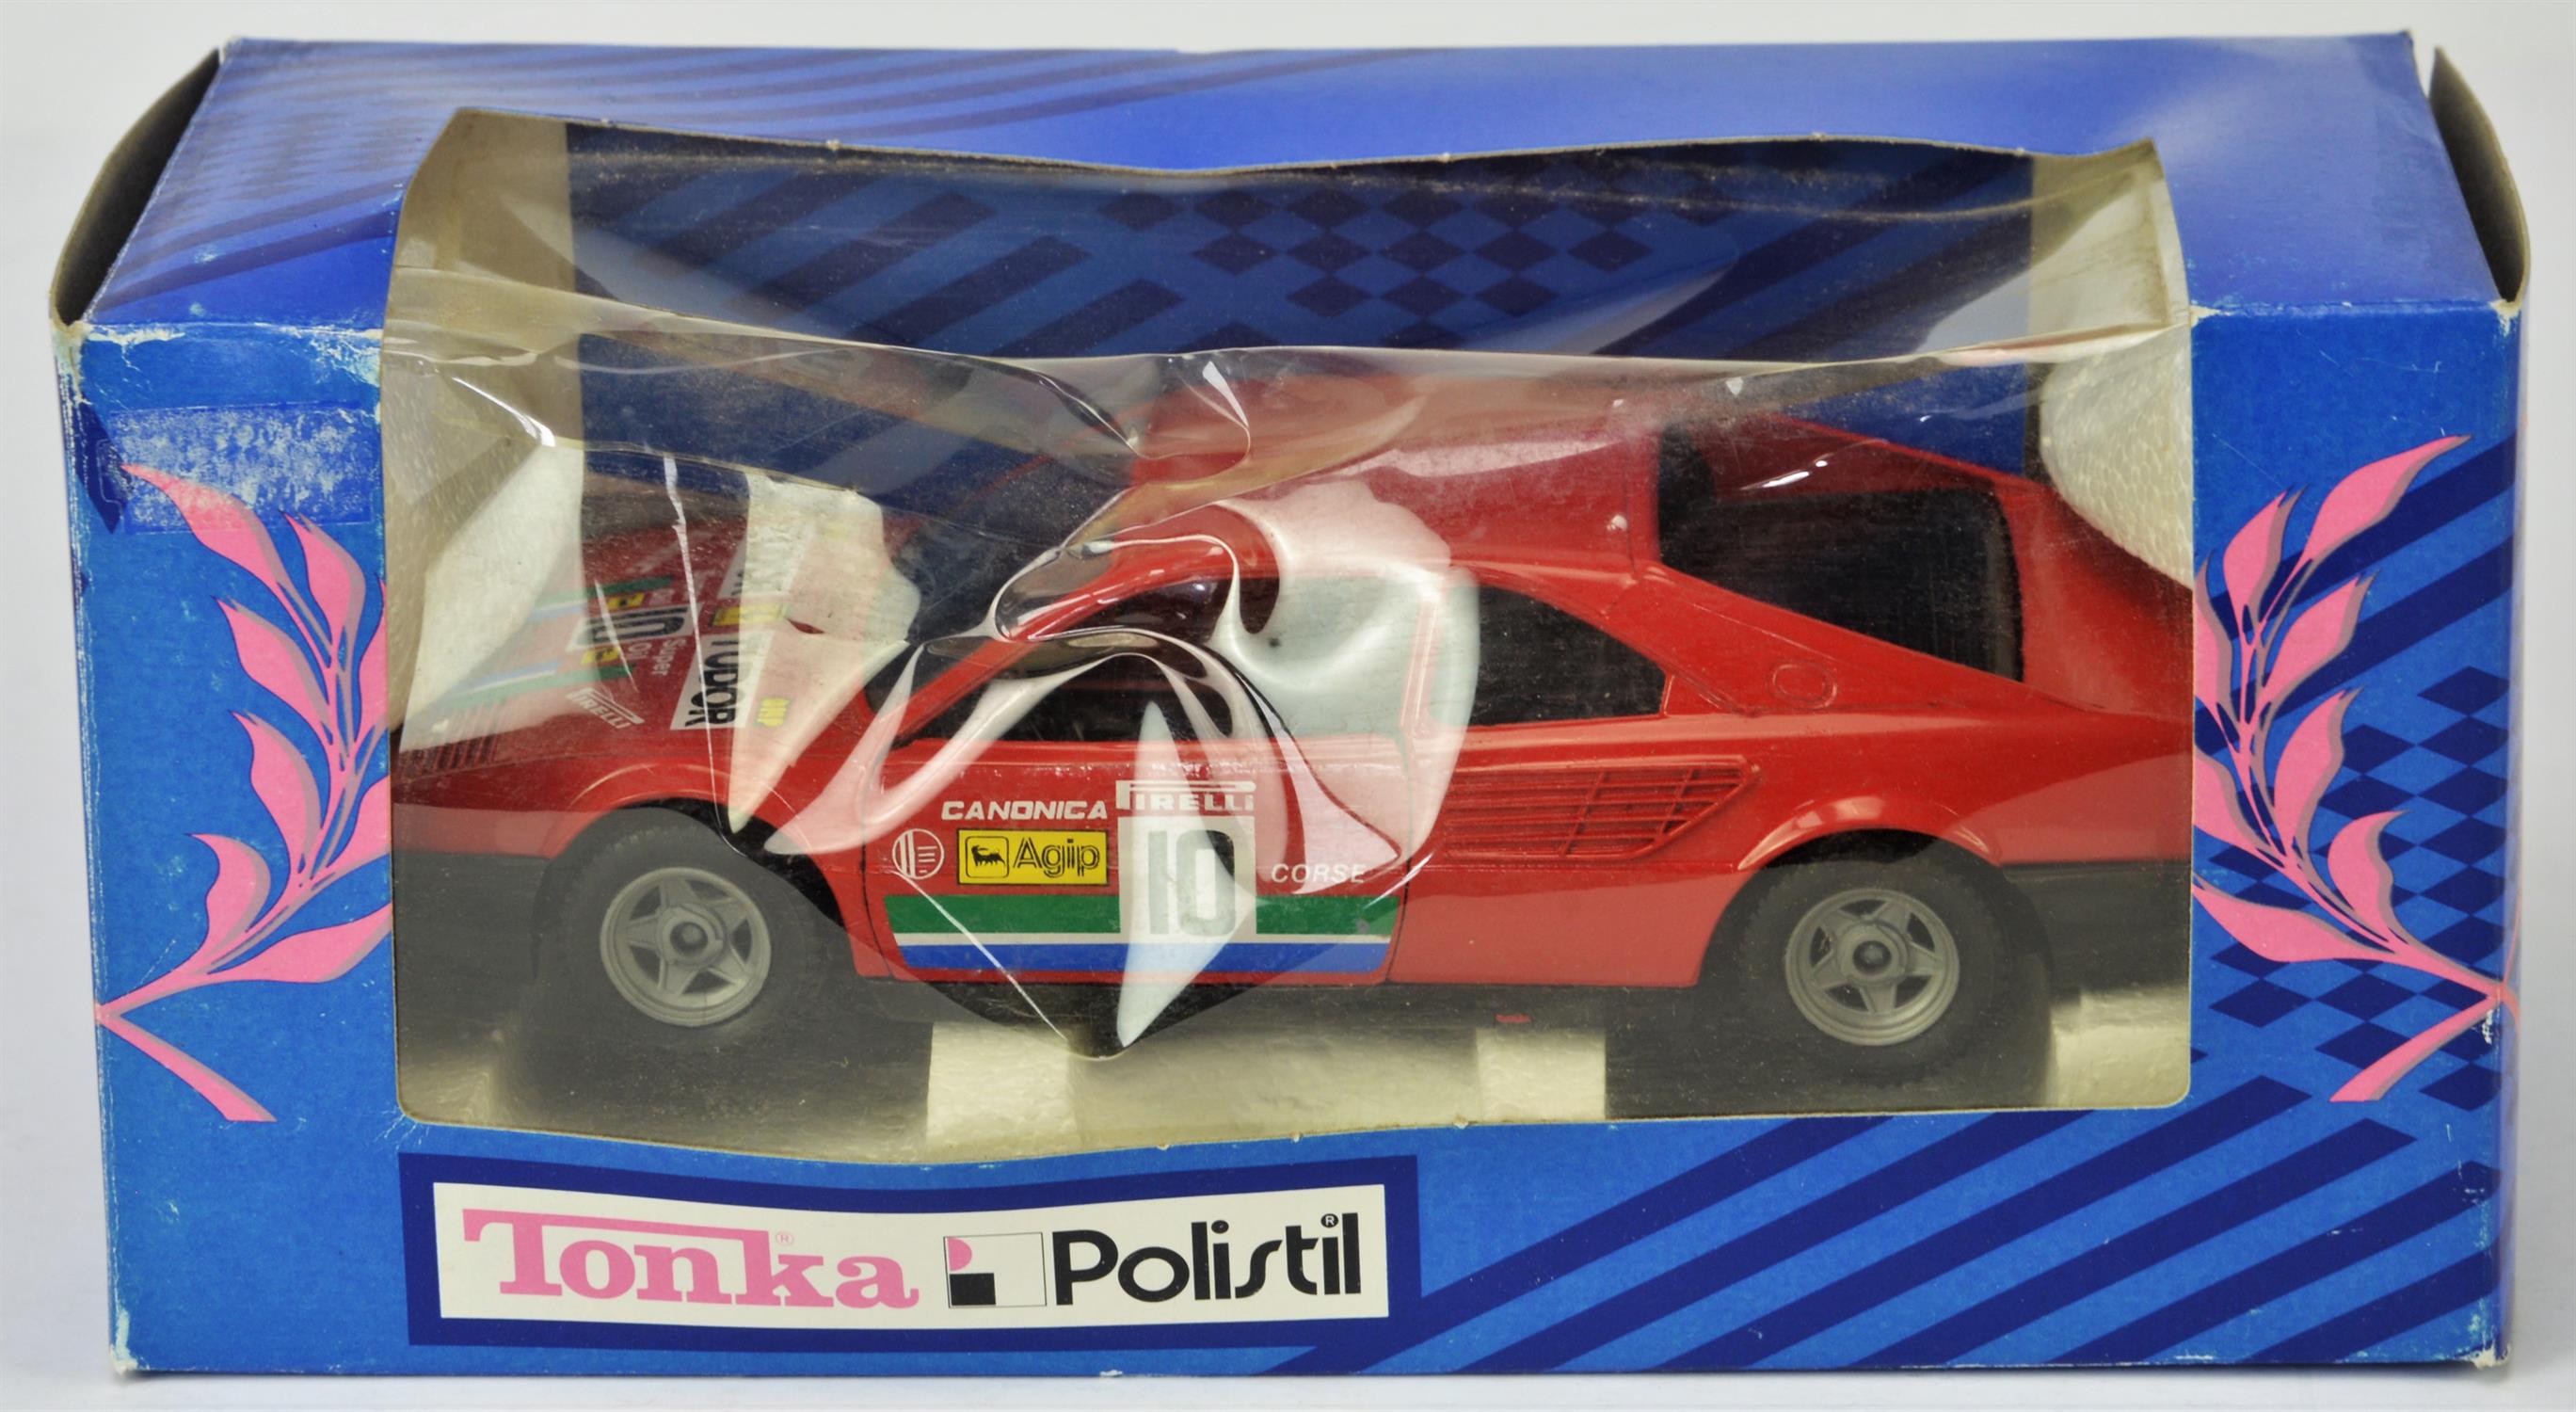 F1 Boxed models and framed items - Models to include, Tonka Polistil, Burago Ferrari F1 models, - Image 5 of 6